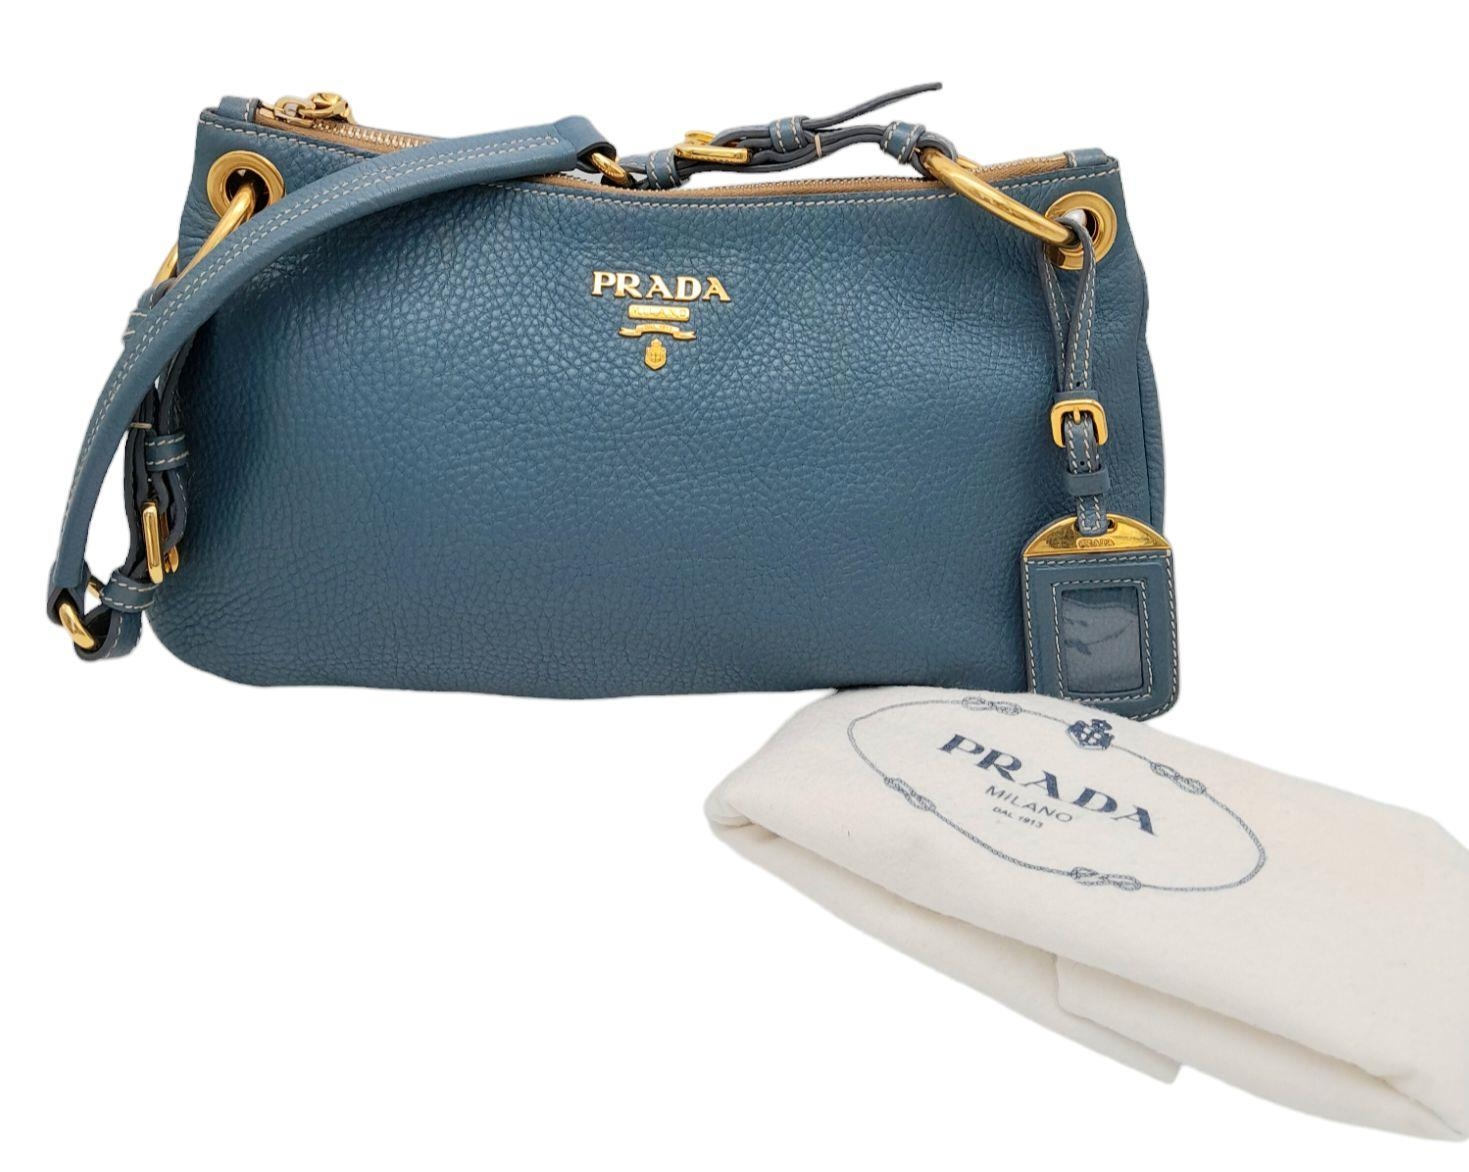 A Prada Marine Blue Vitello Daino Shoulder Bag. Leather exterior with gold-toned hardware, - Image 3 of 8